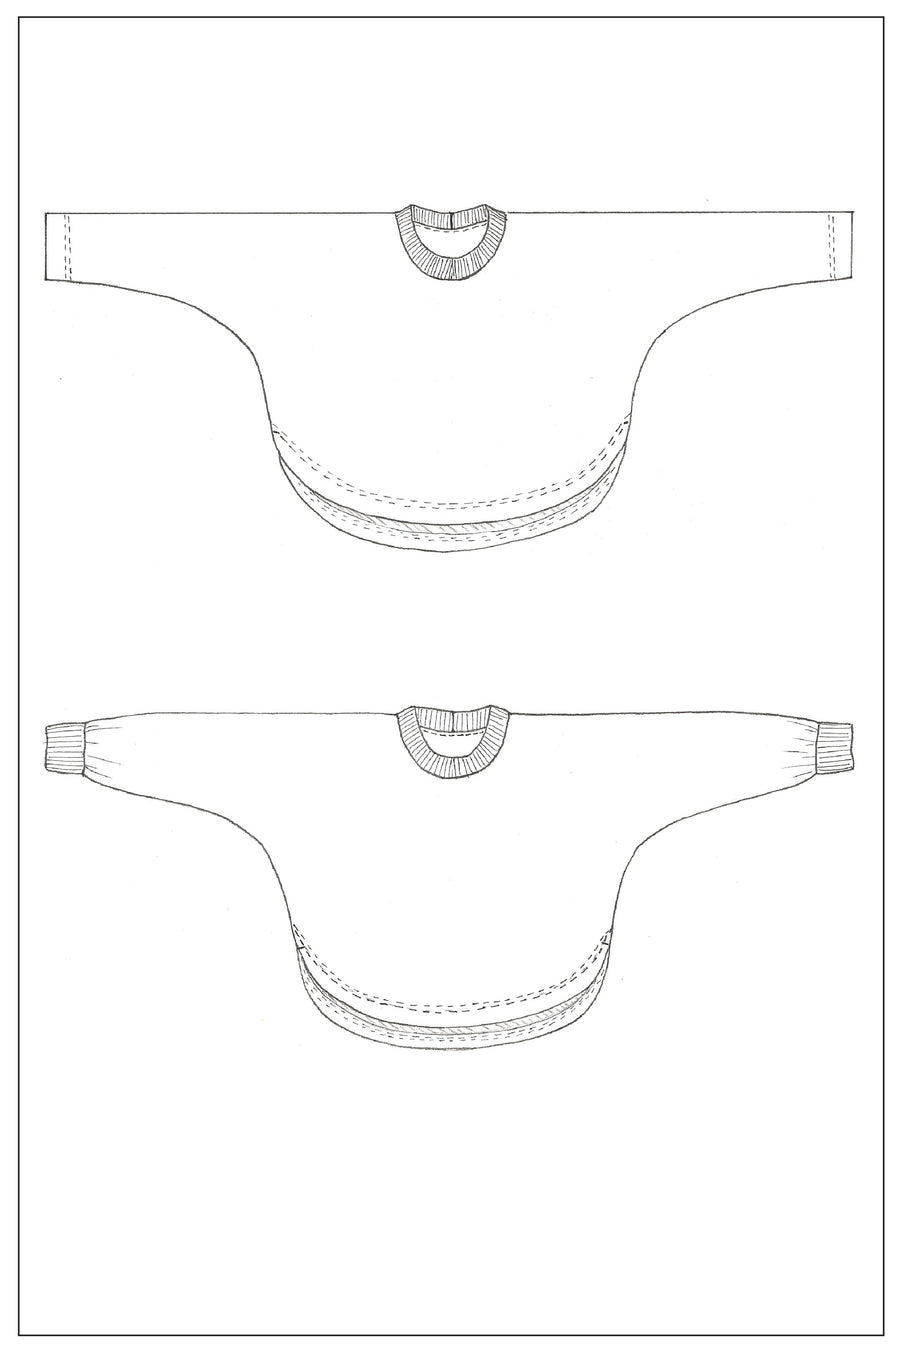 ZW Jumper - Printed or PDF Sewing Pattern